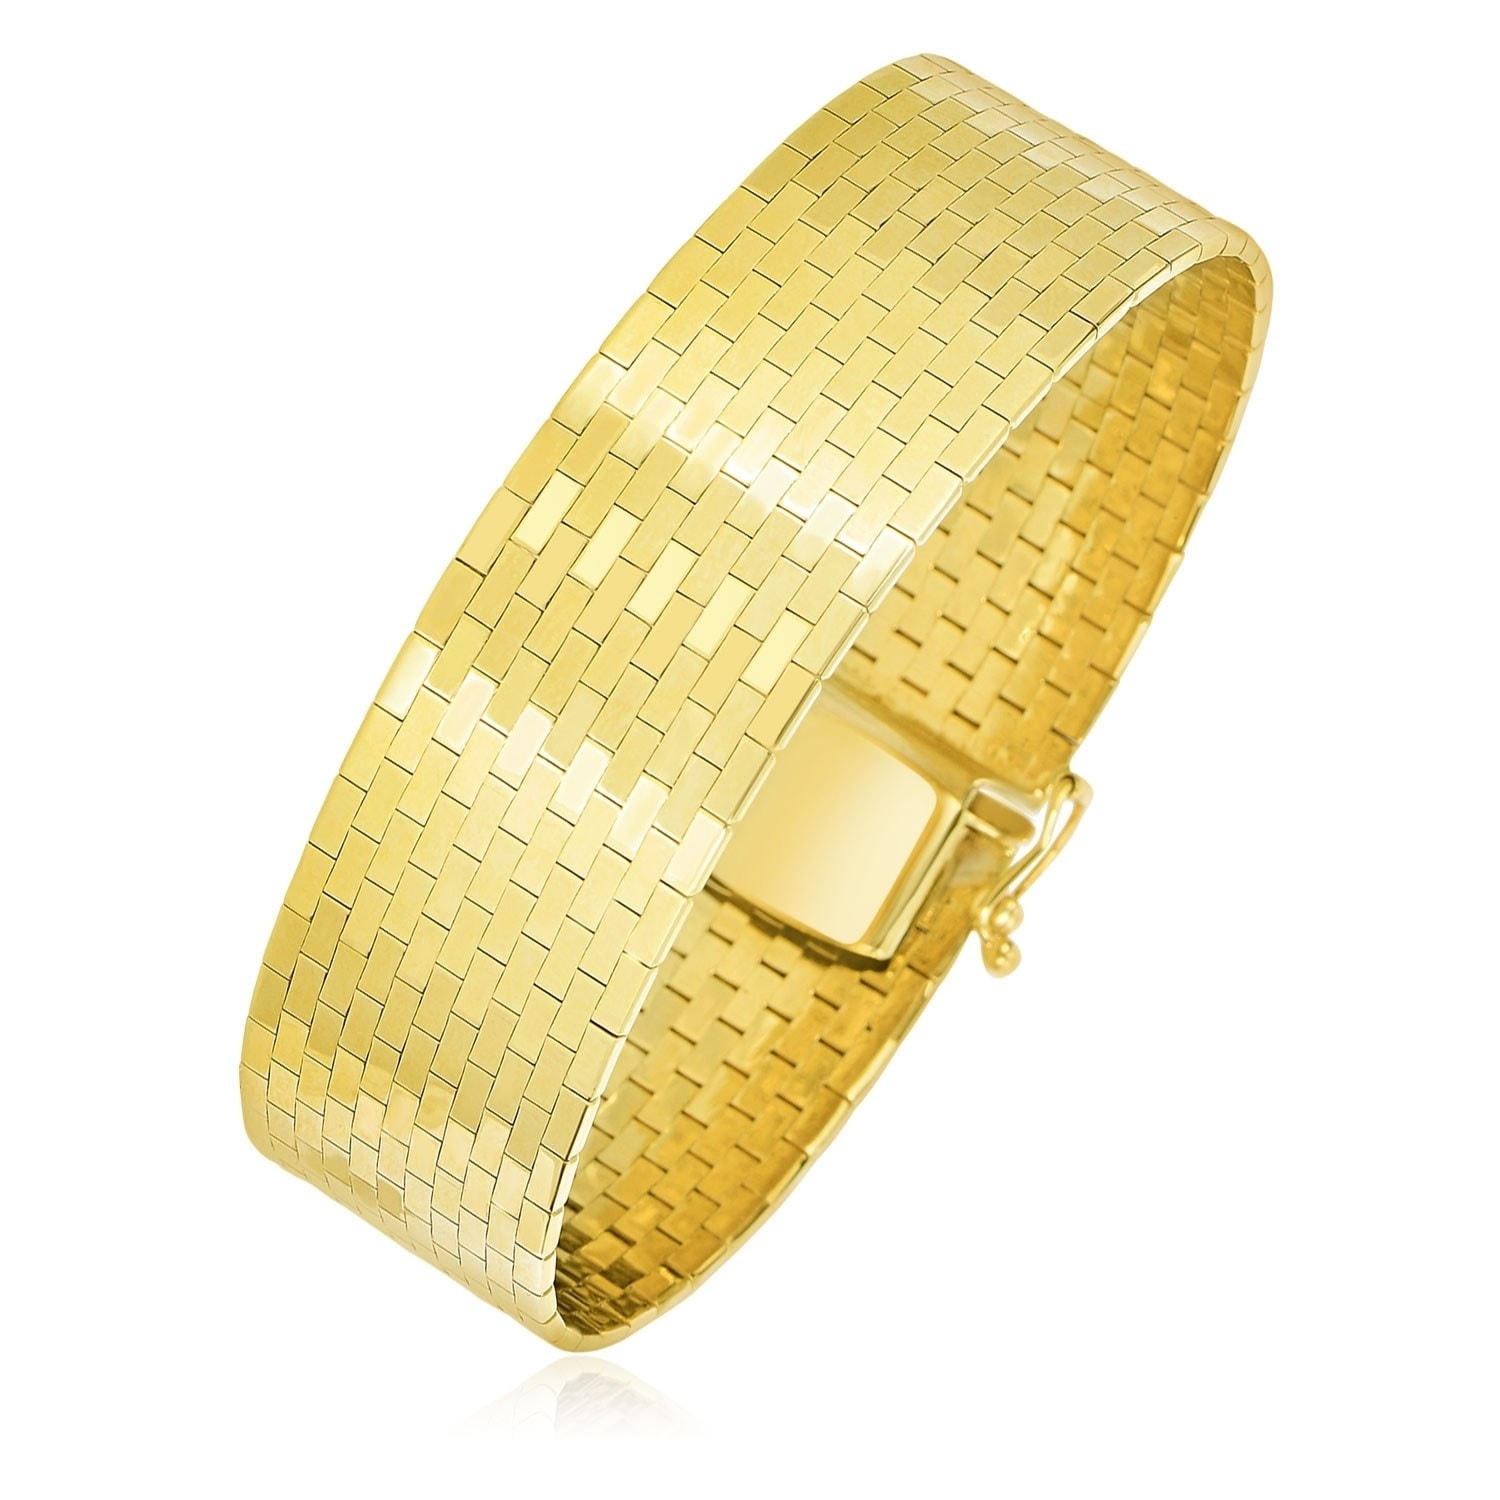 14k gold omega bracelet